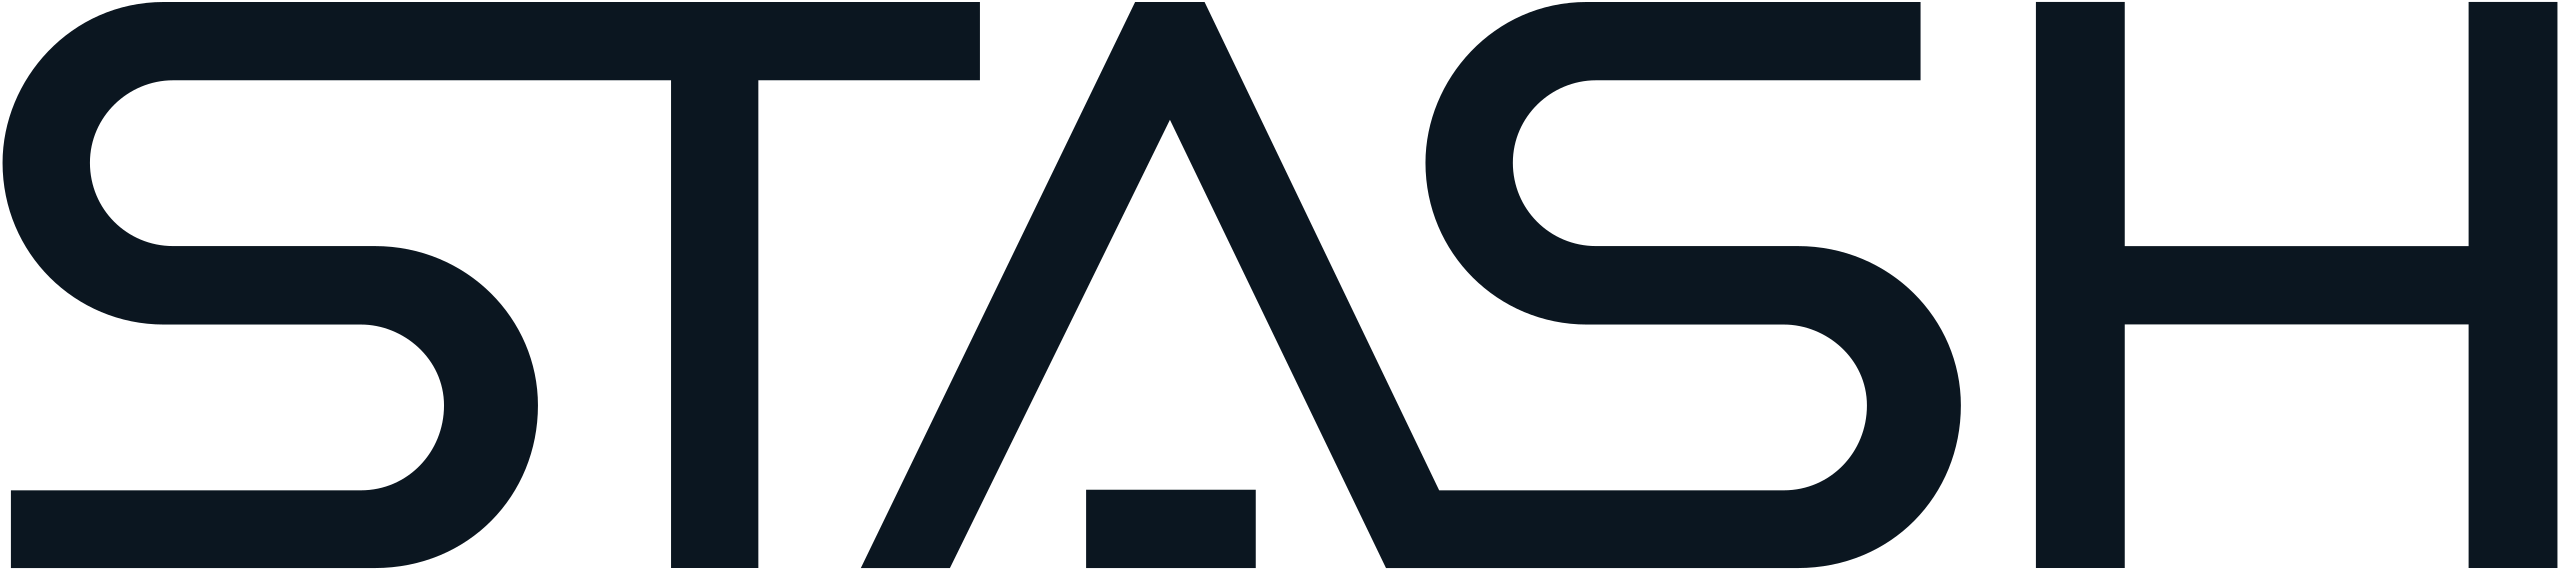 Stash logo